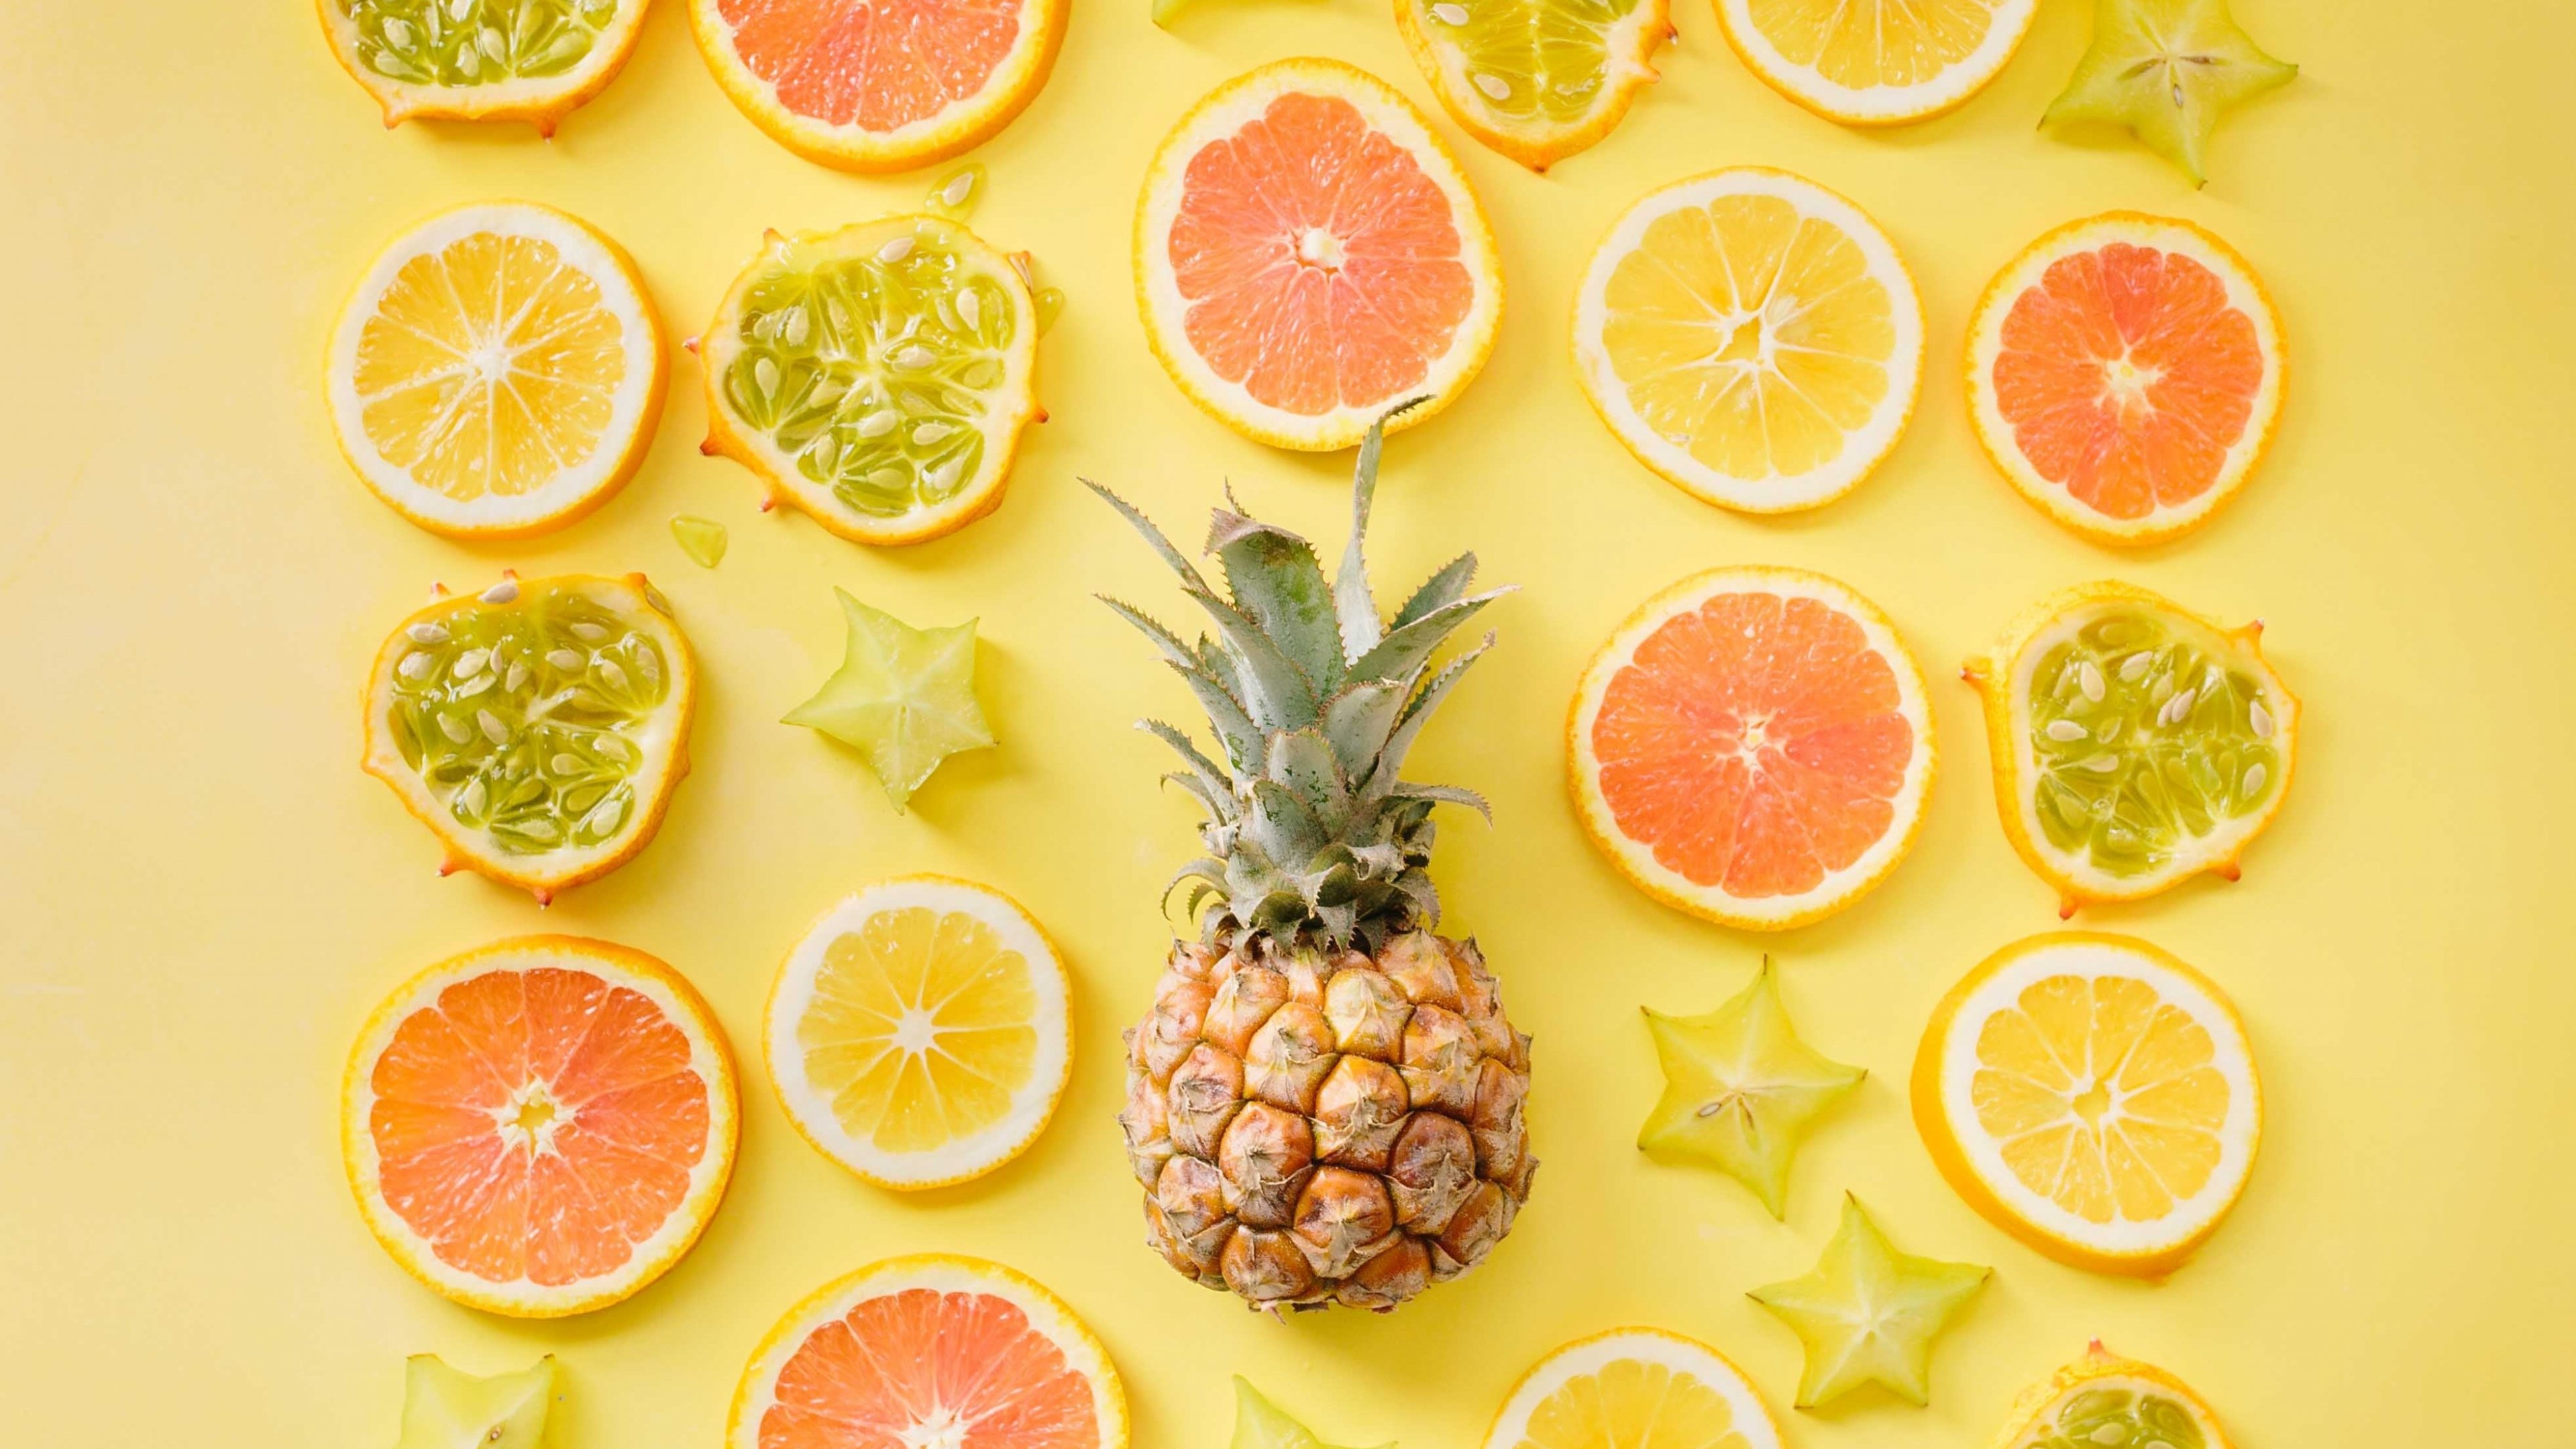 Download 3840x2160 citrus, lemon, pineapple, fruits, slices 4k wallpaper, uhd wallpaper, 16:9 widescreen wallpaper, 3840x2160 HD image, background, 8164